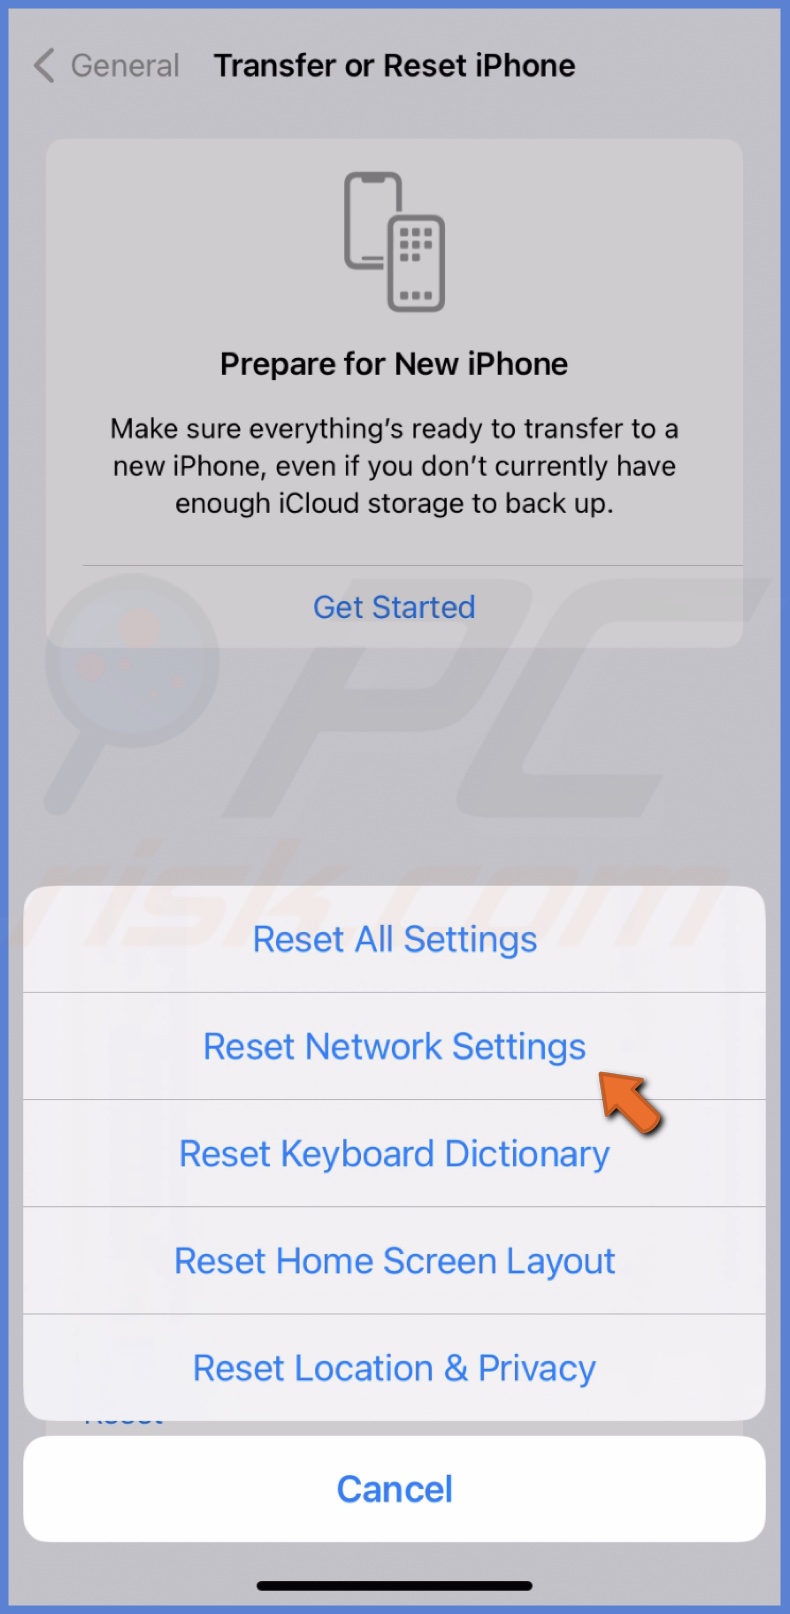 Reset Network Settings